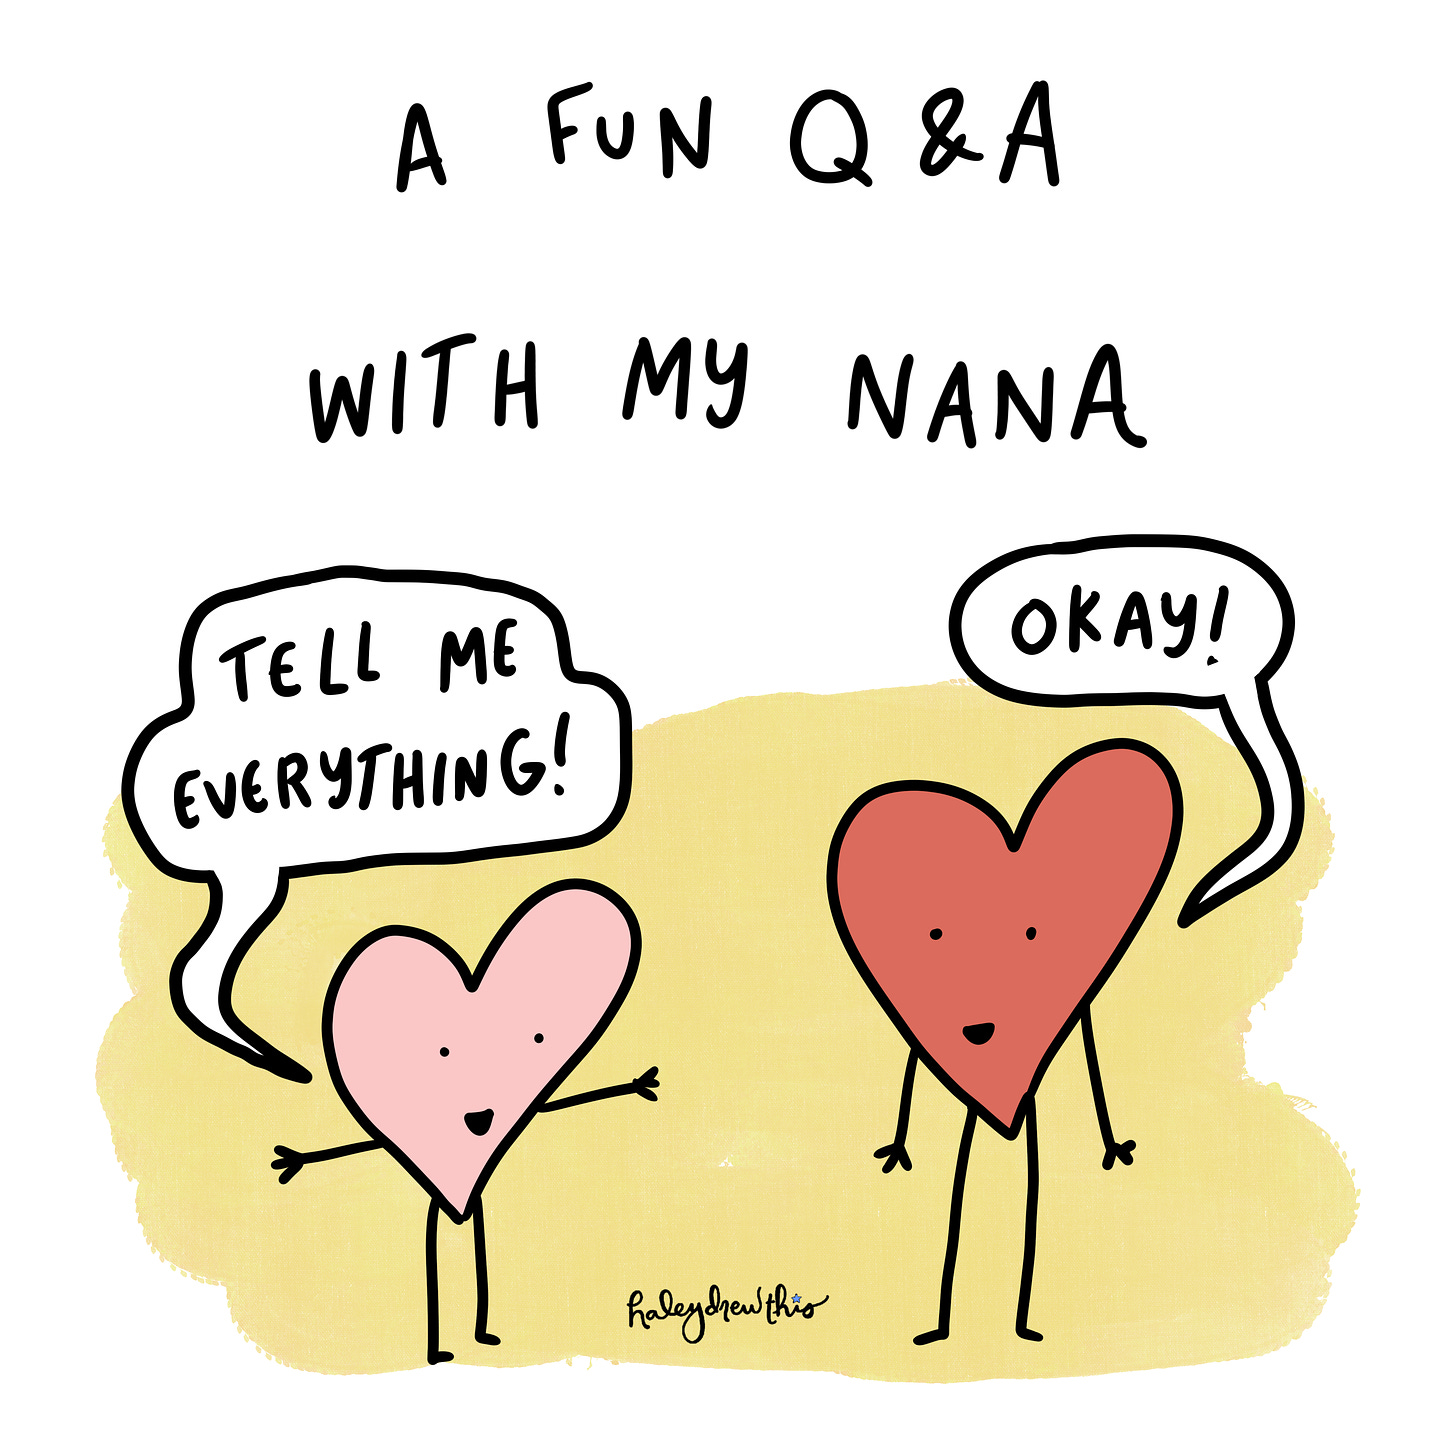 A fun Q&A with my nana